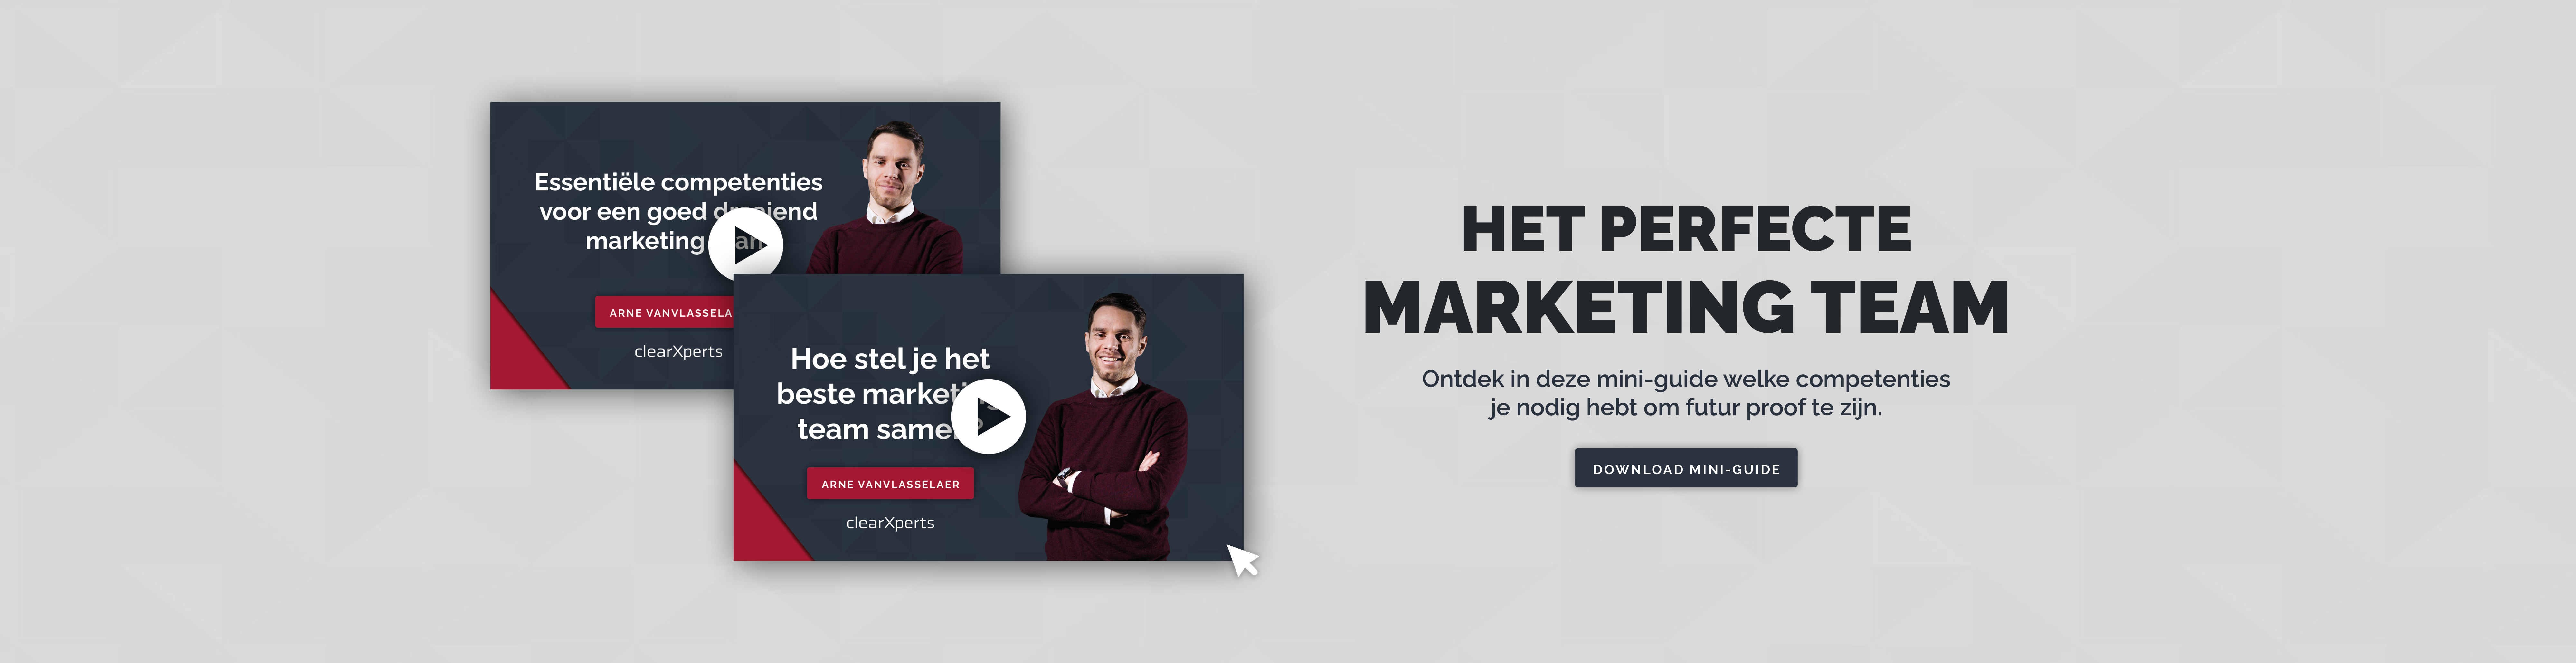 Banner Hubspot_Het perfect marketing team